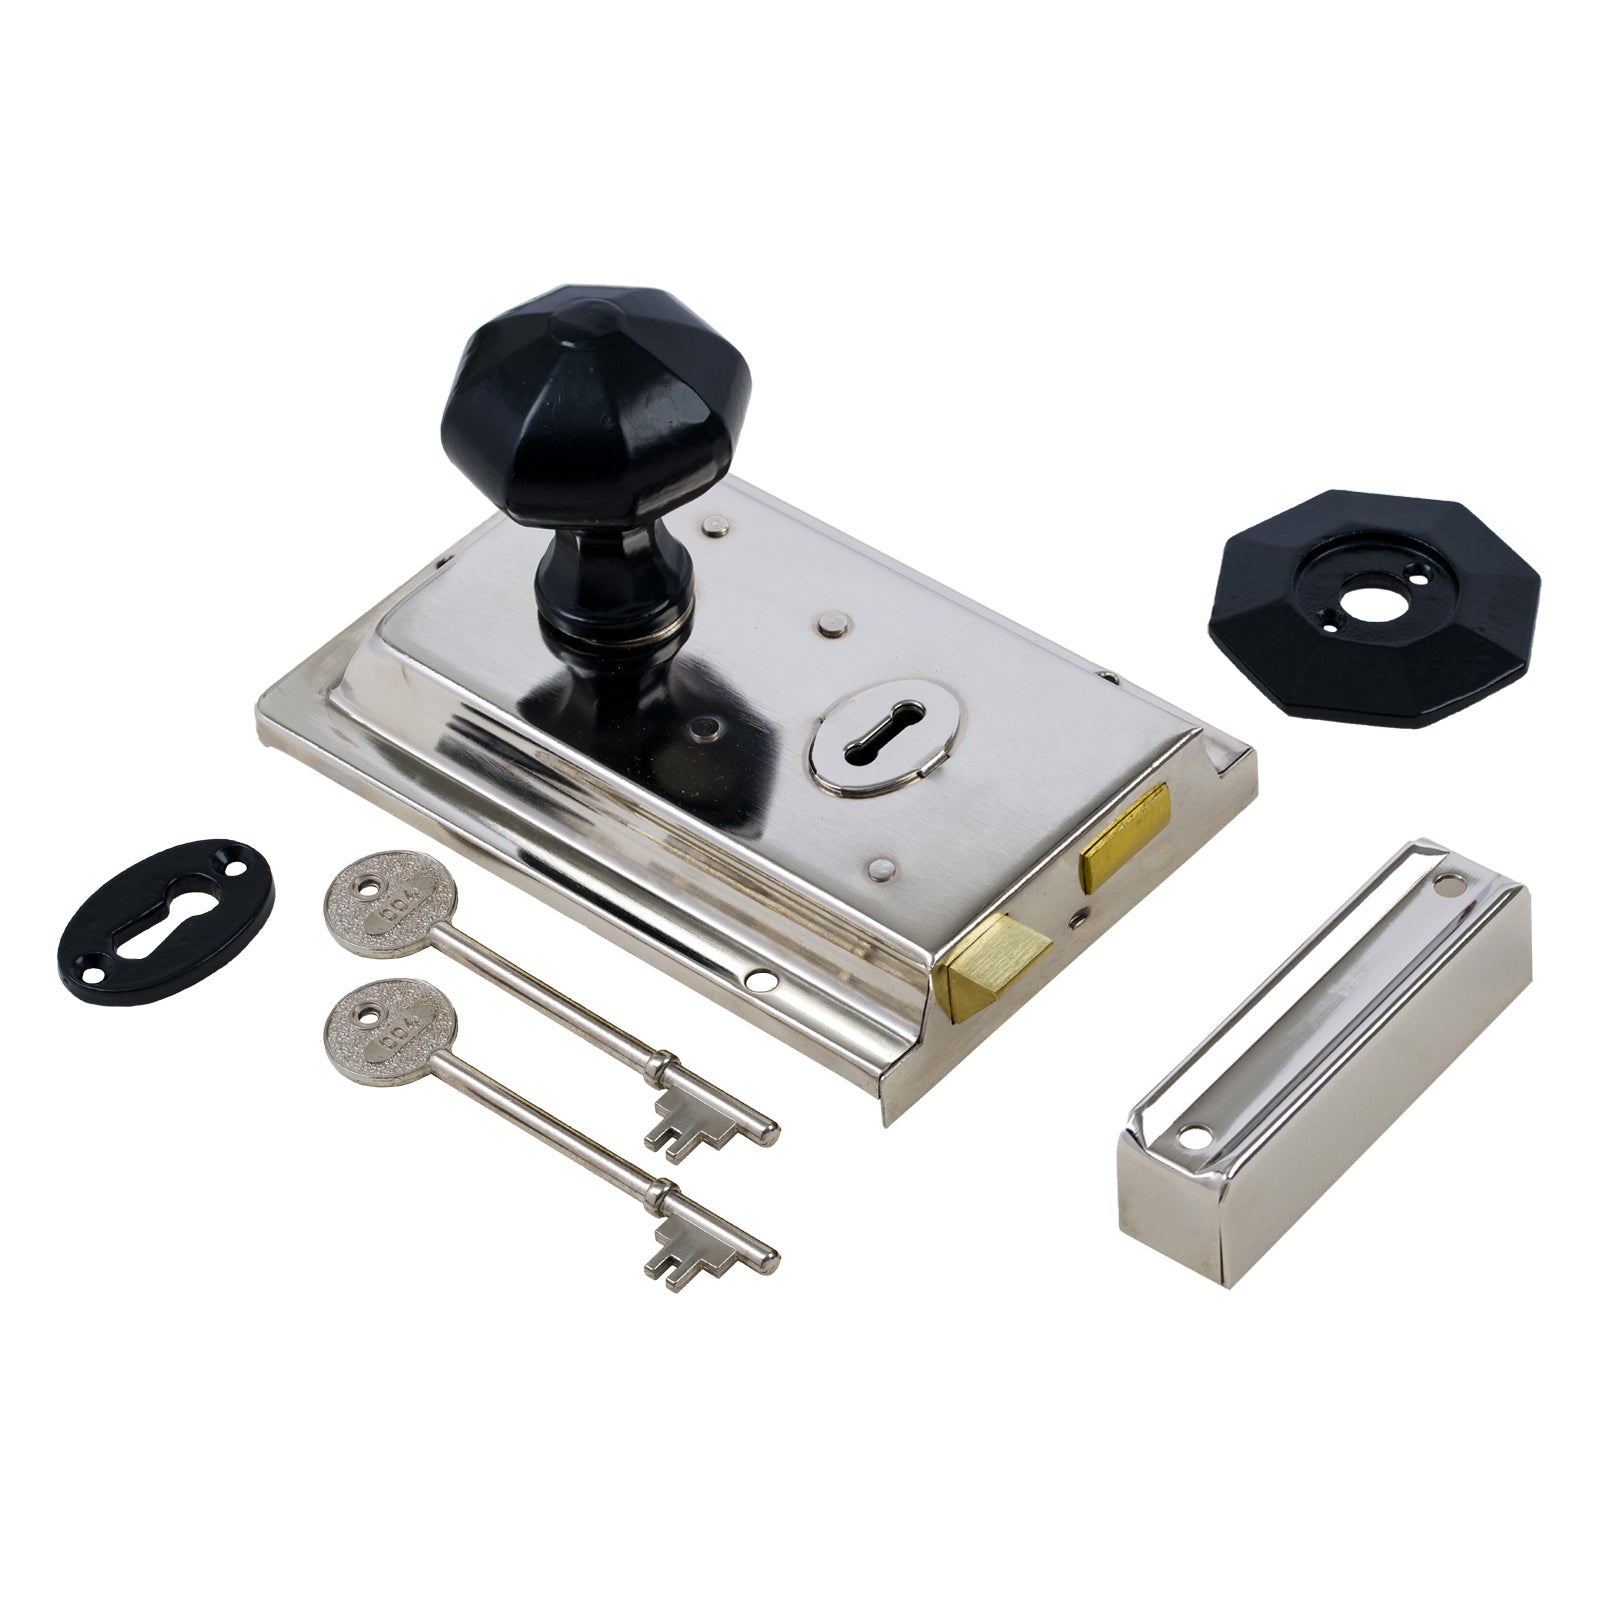 SHOW Octagonal Door Knob Set - Black On Polished Nickel Rim Lock